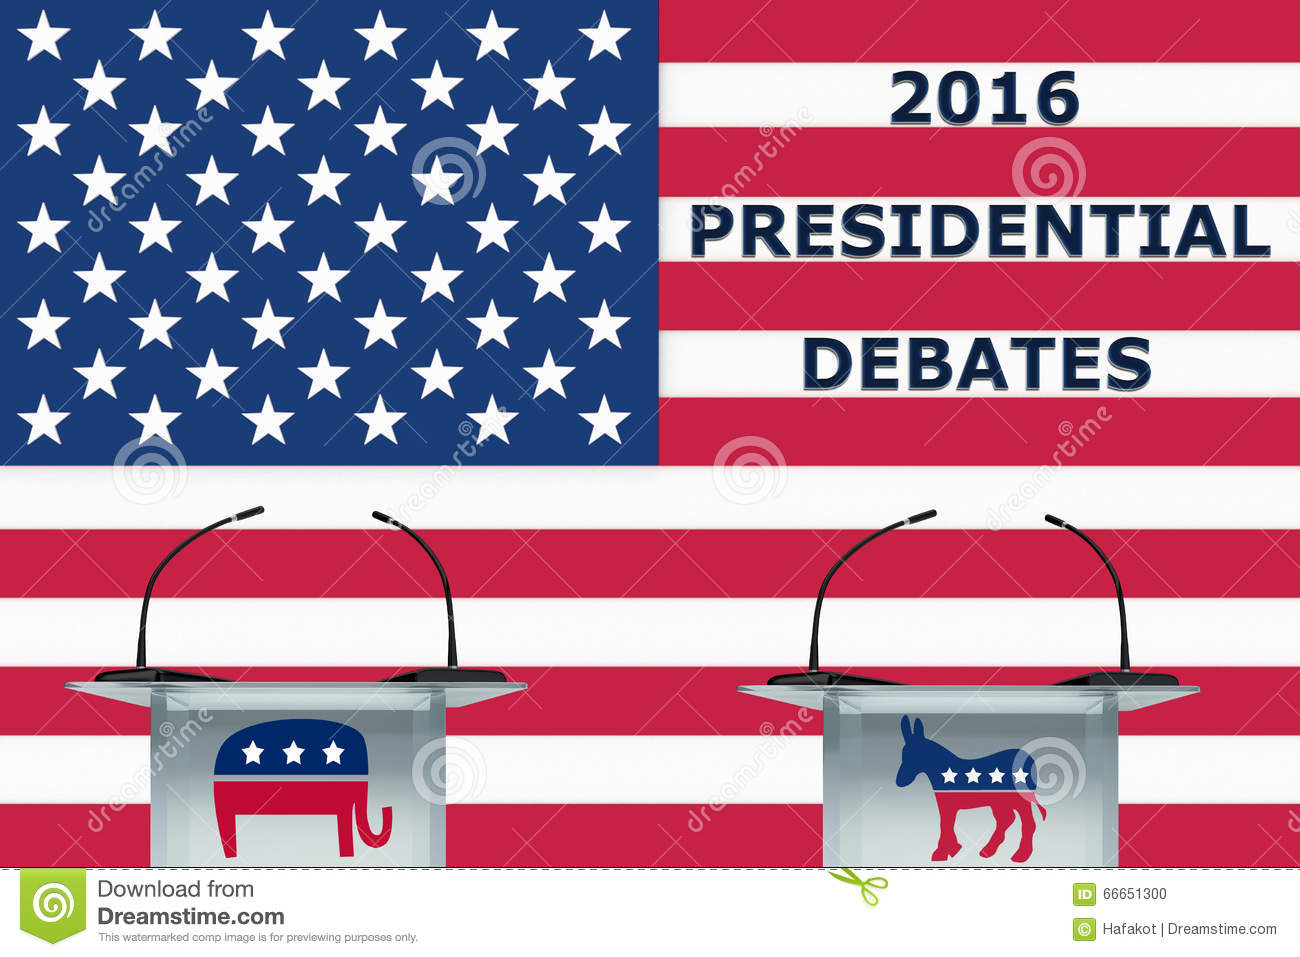 Presidential Debate October 19, 2016 between Hilary Clinton and Donald Trump